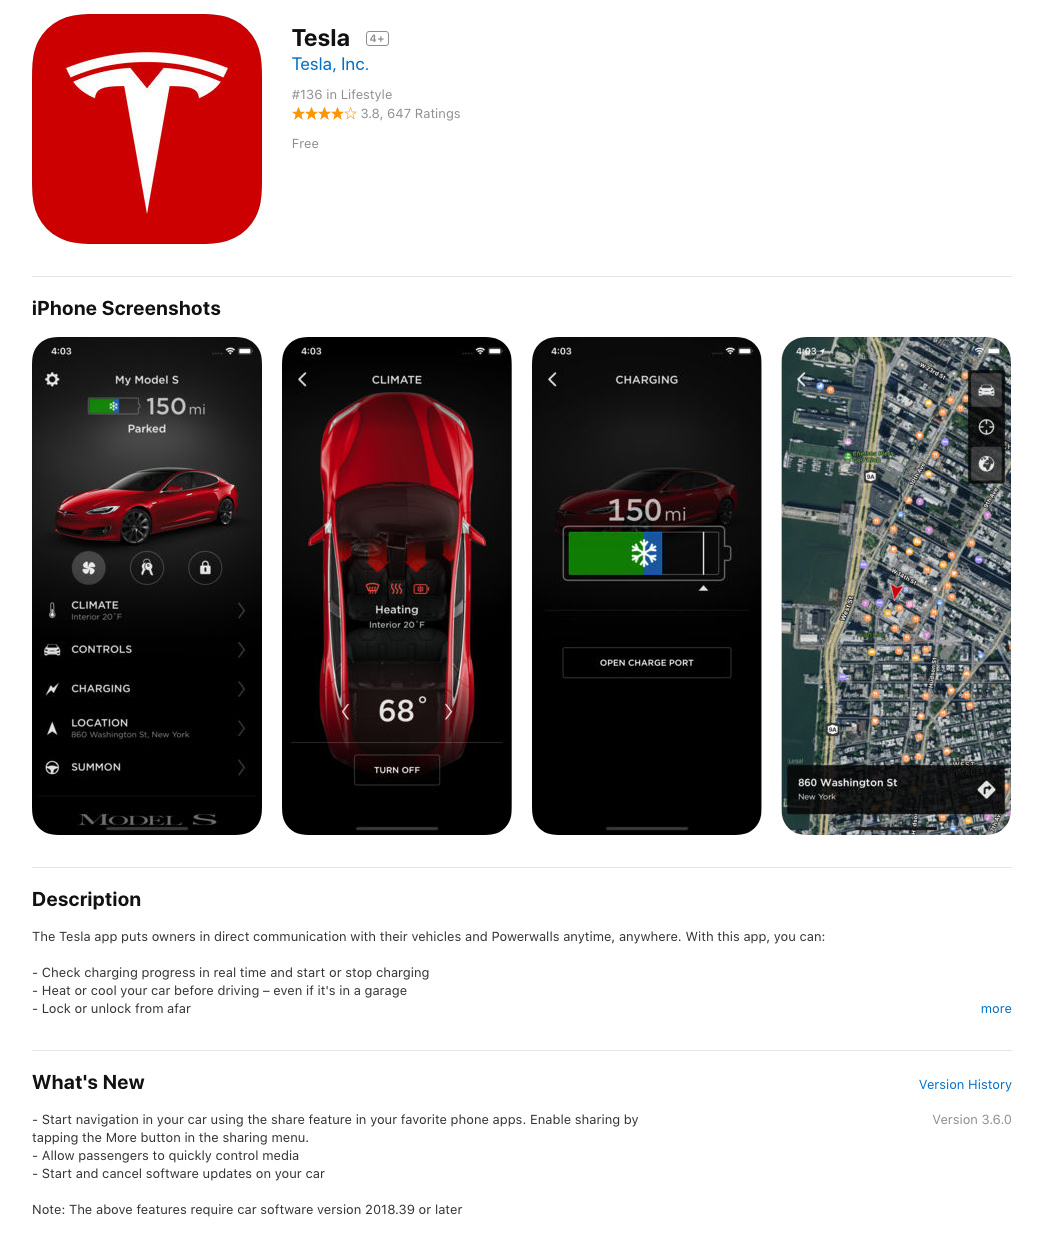 Tesla_iOS_App_v3.6.0.jpg